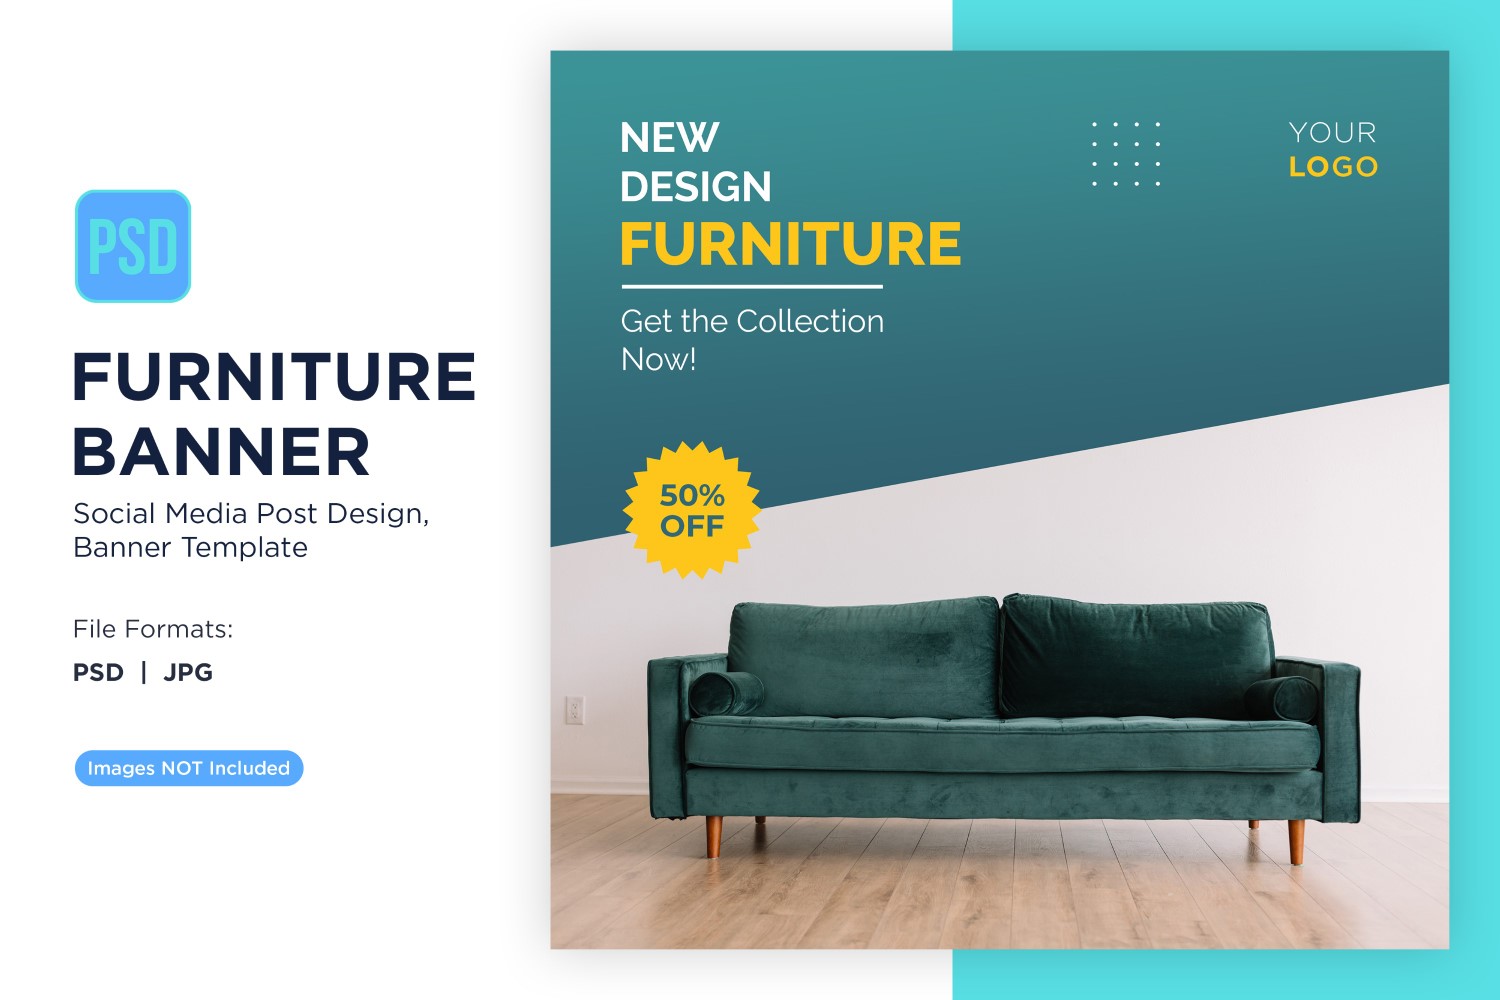 New Design Furniture Banner Design Template 2